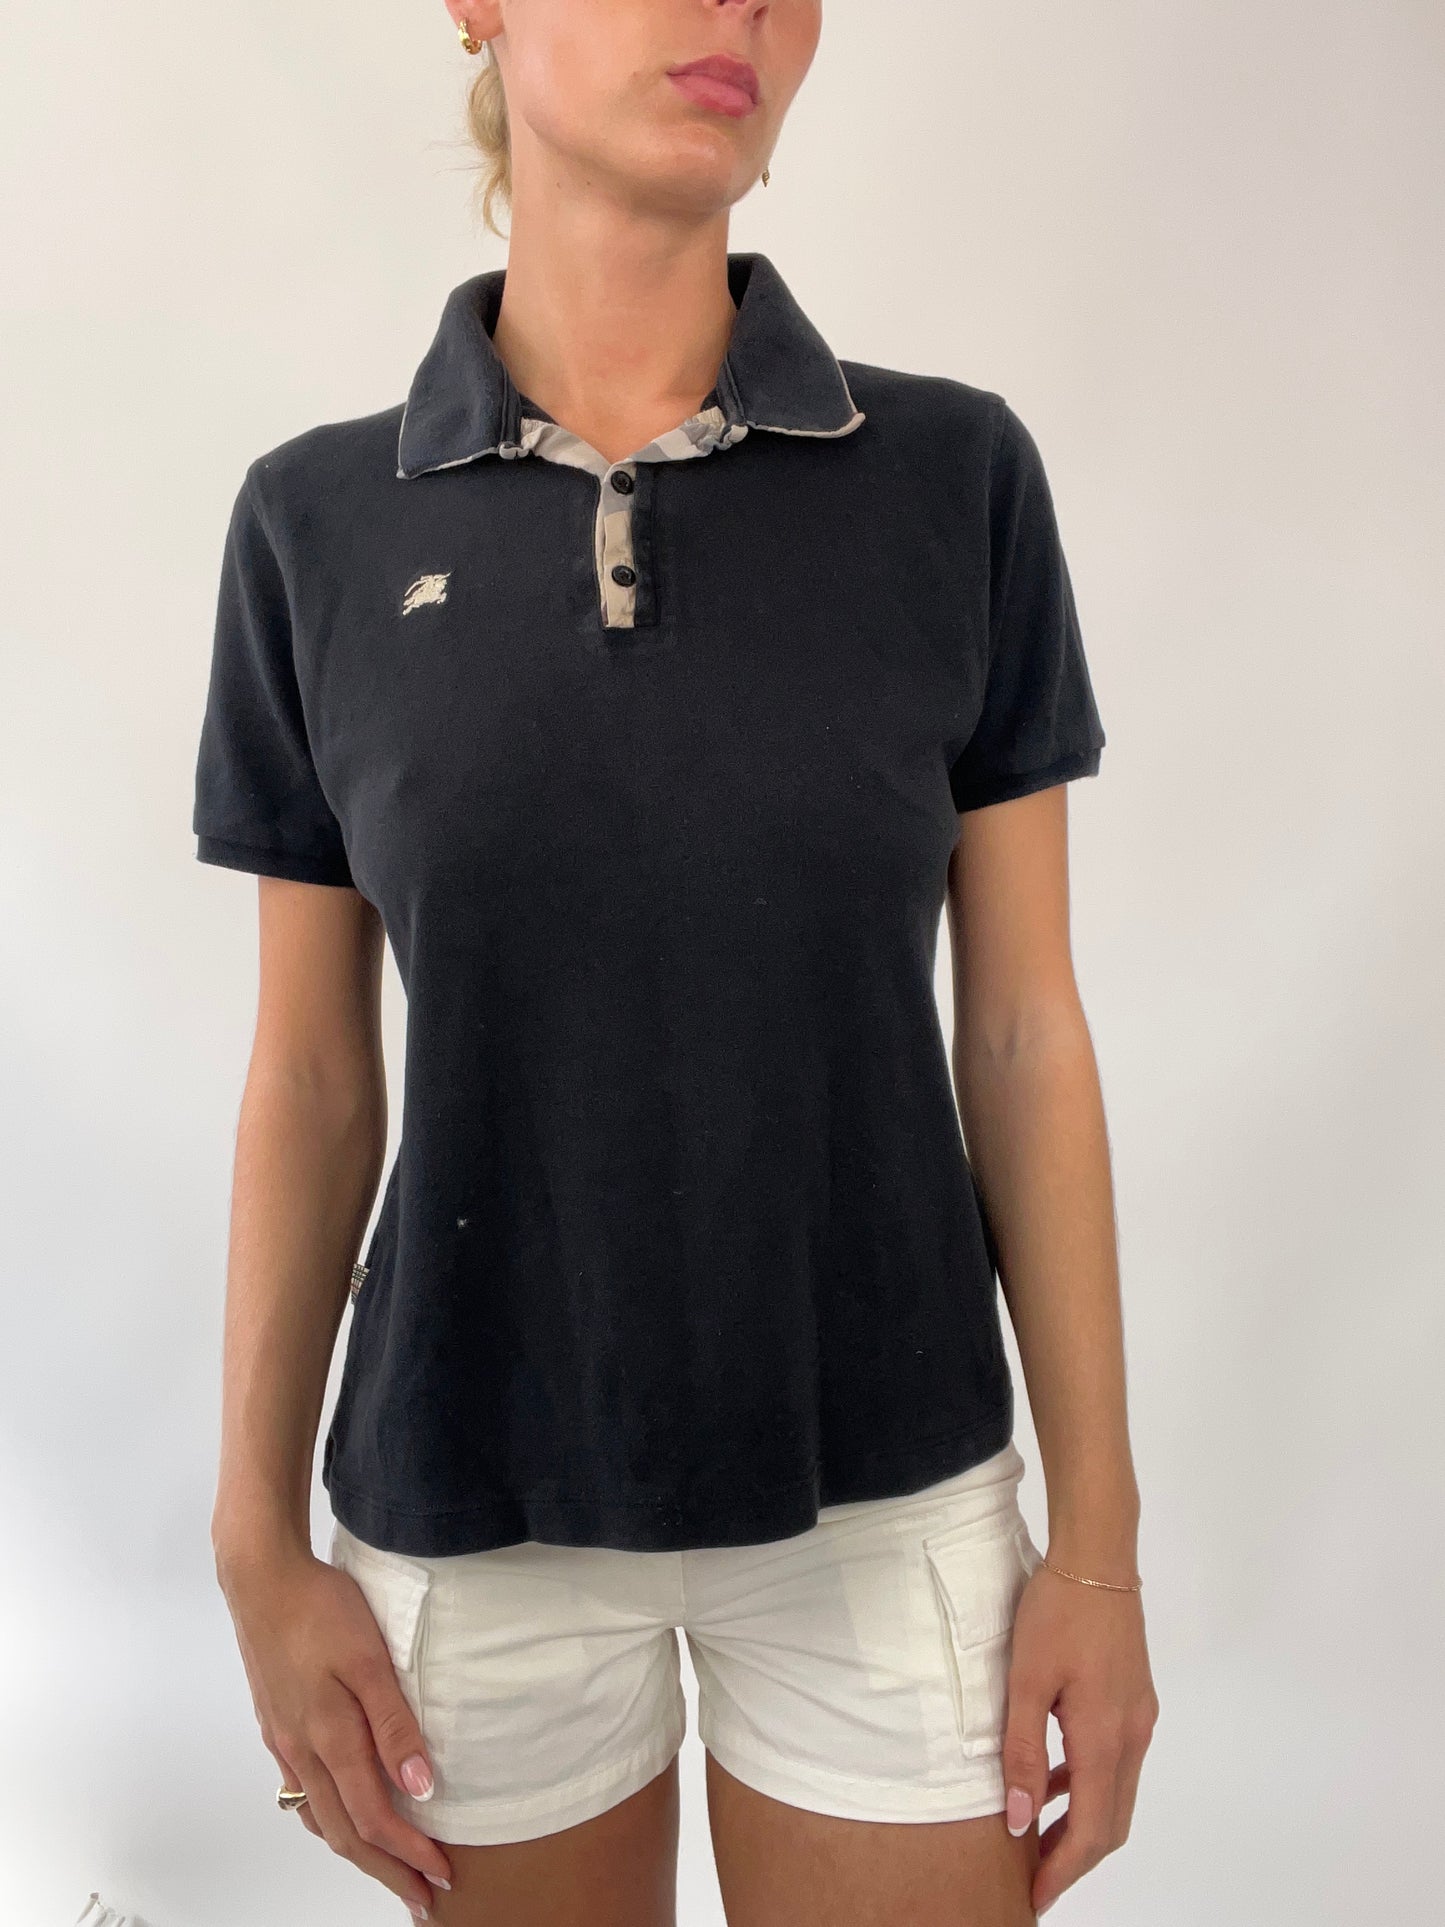 💻EUROS DROP | medium black burberry style polo shirt with nova check on collar